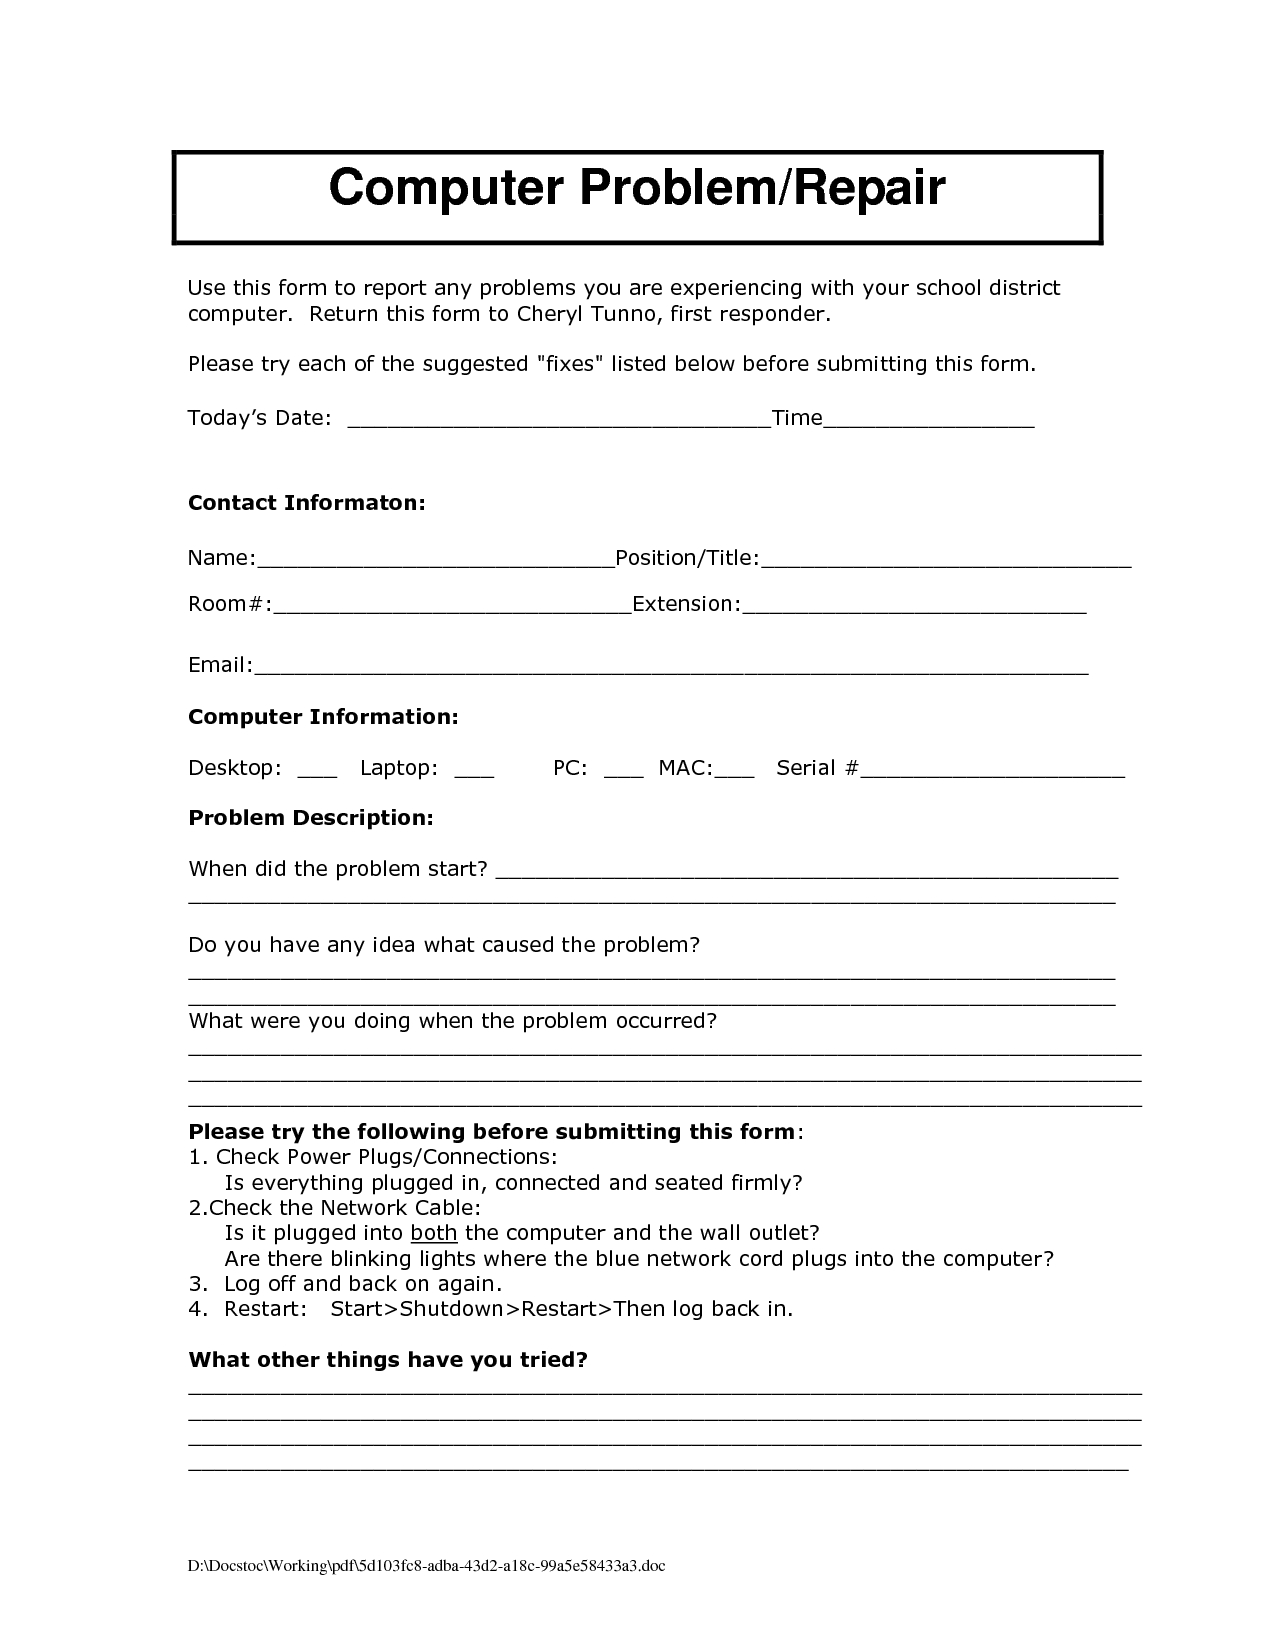 Computer Maintenance Report Form Template Service Format Pertaining To Computer Maintenance Report Template